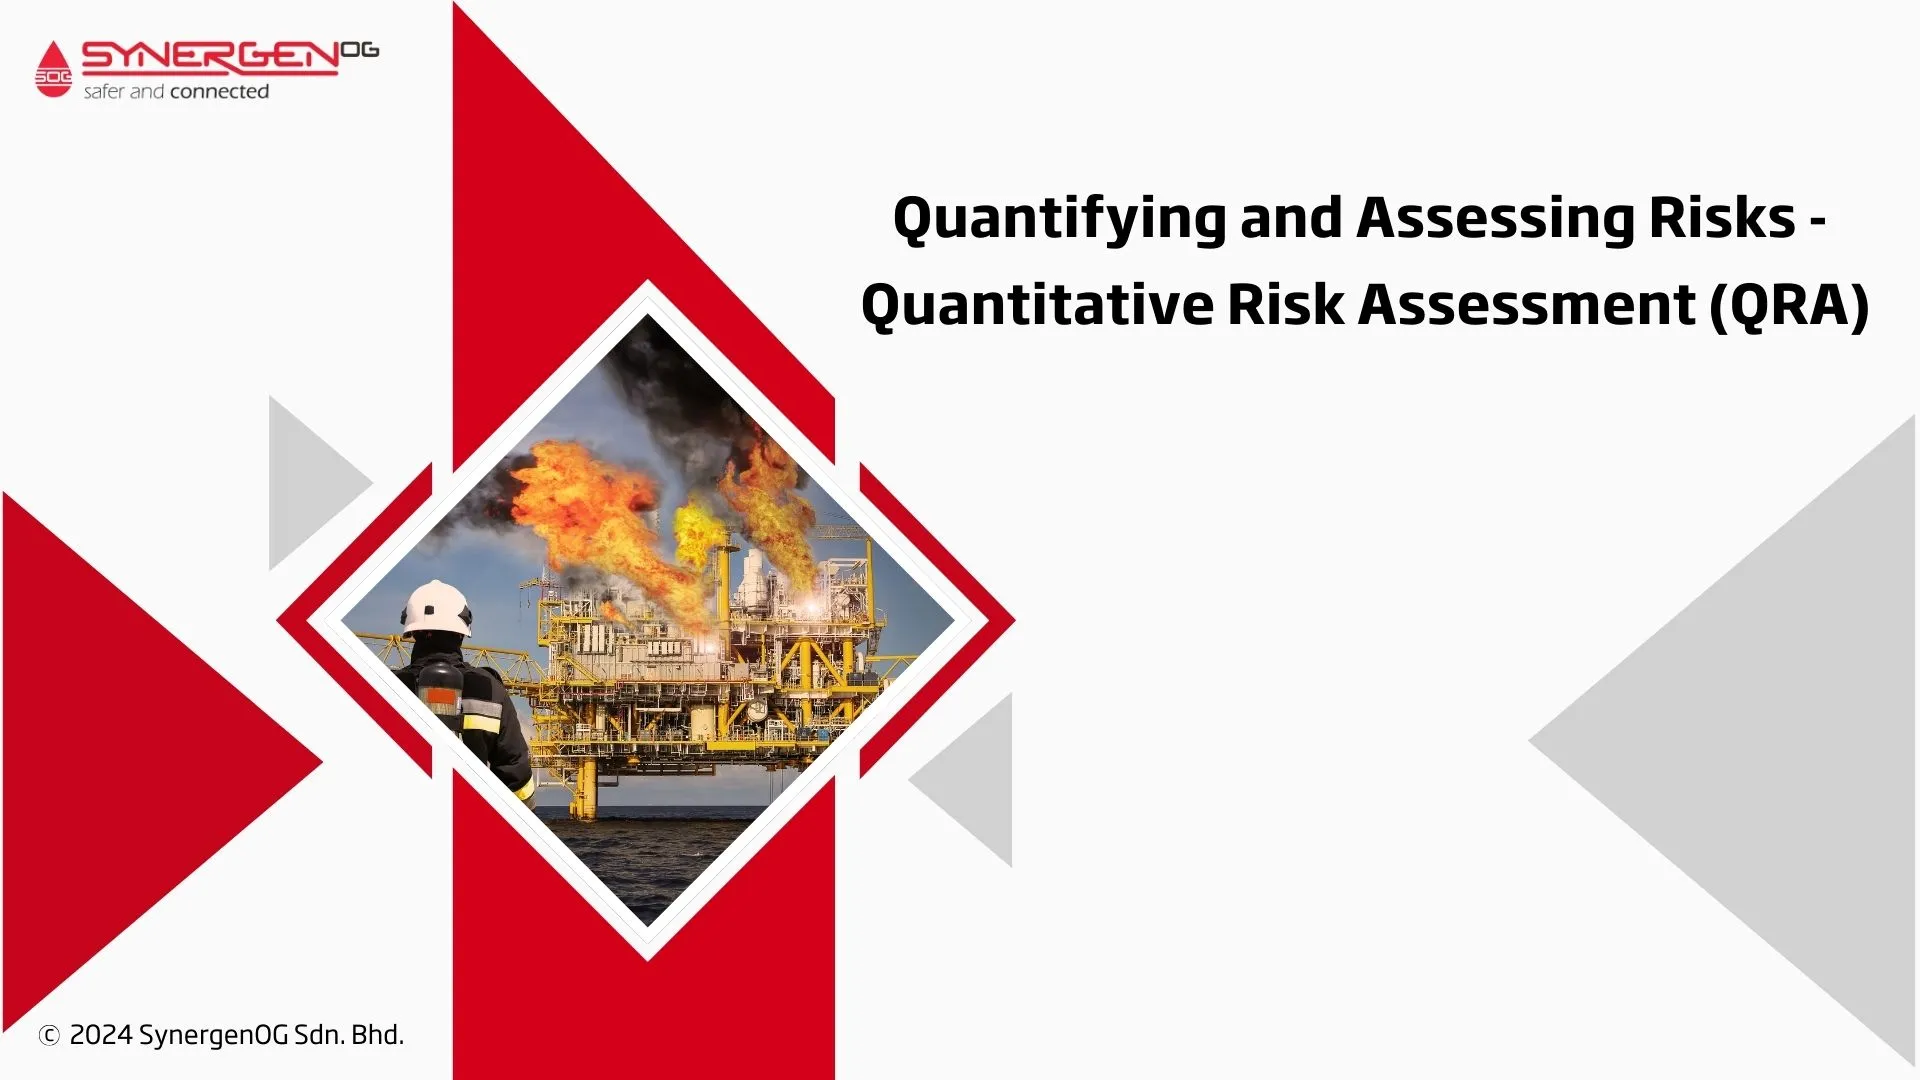 Quantifying and Assessing Risks - Quantitative Risk Assessment (QRA)